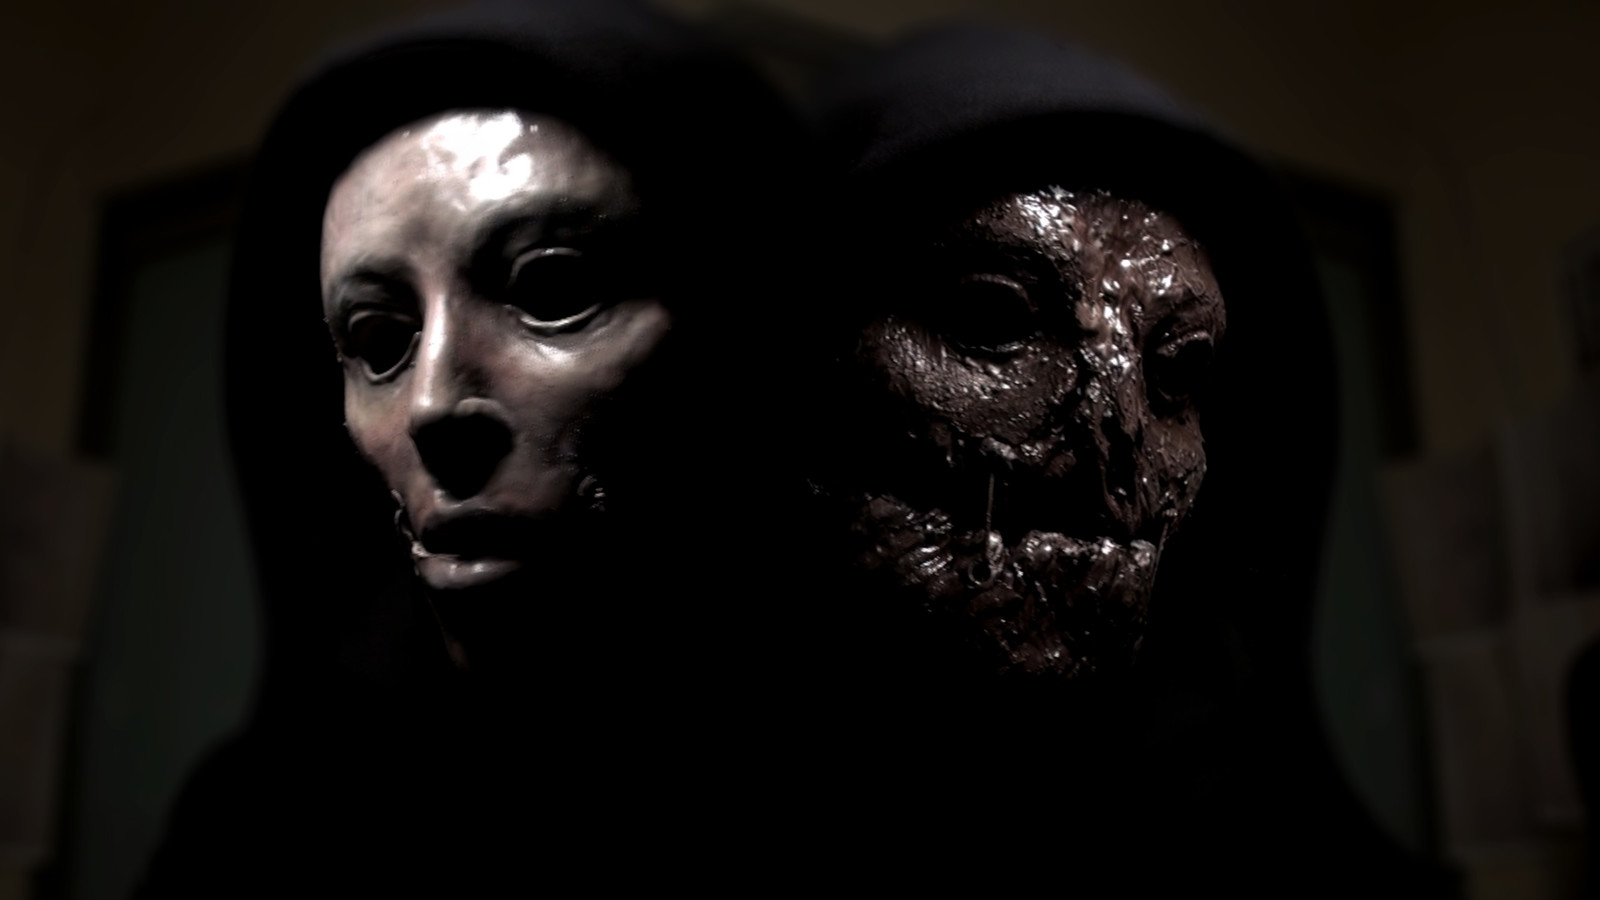 Paradox (2013) - Alternate of the original Stigmata mask